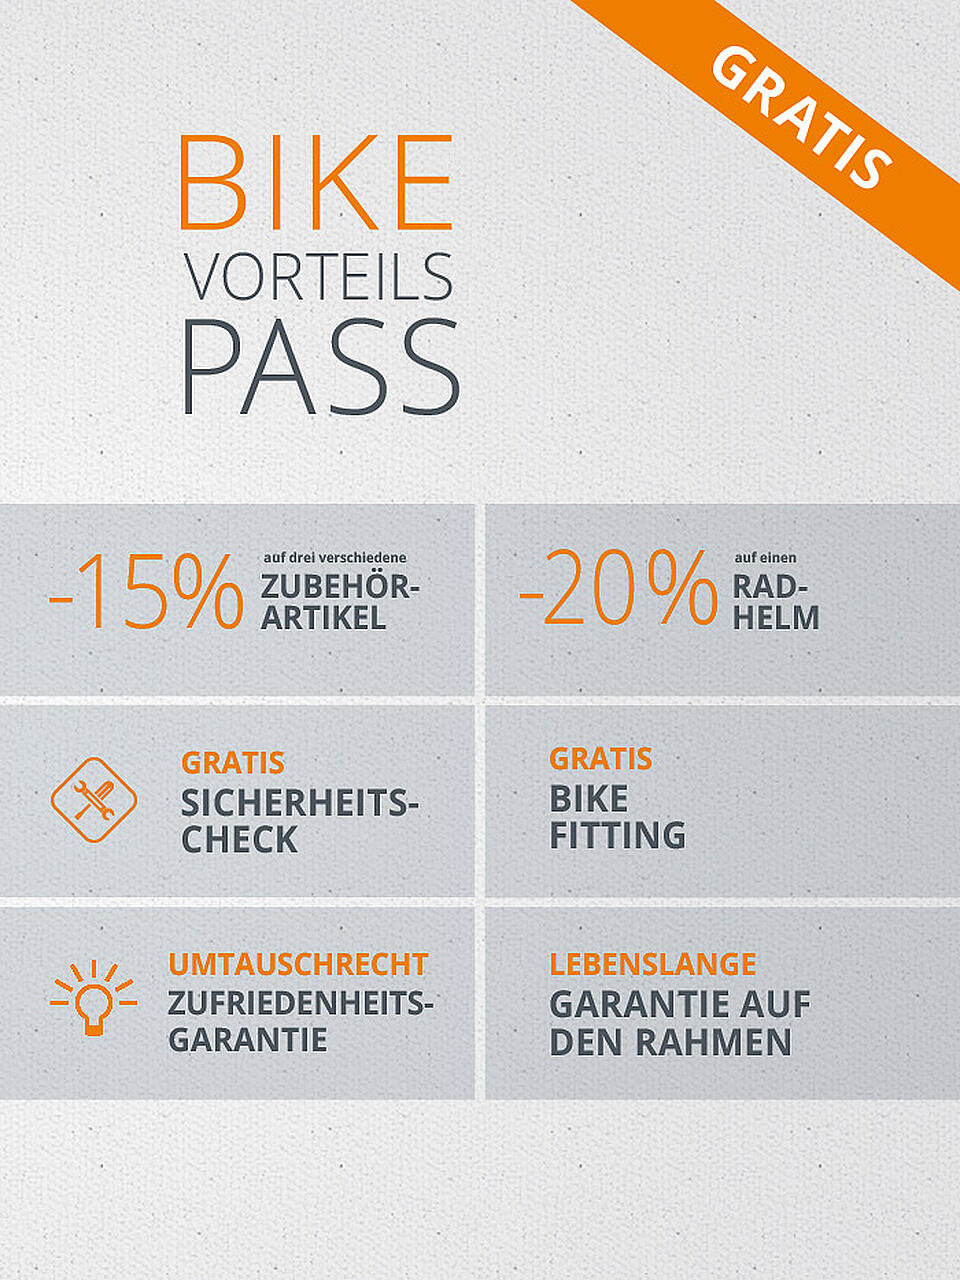 BERGAMONT | Gravel Bike 28" Grandurance RD 5 2021 | orange